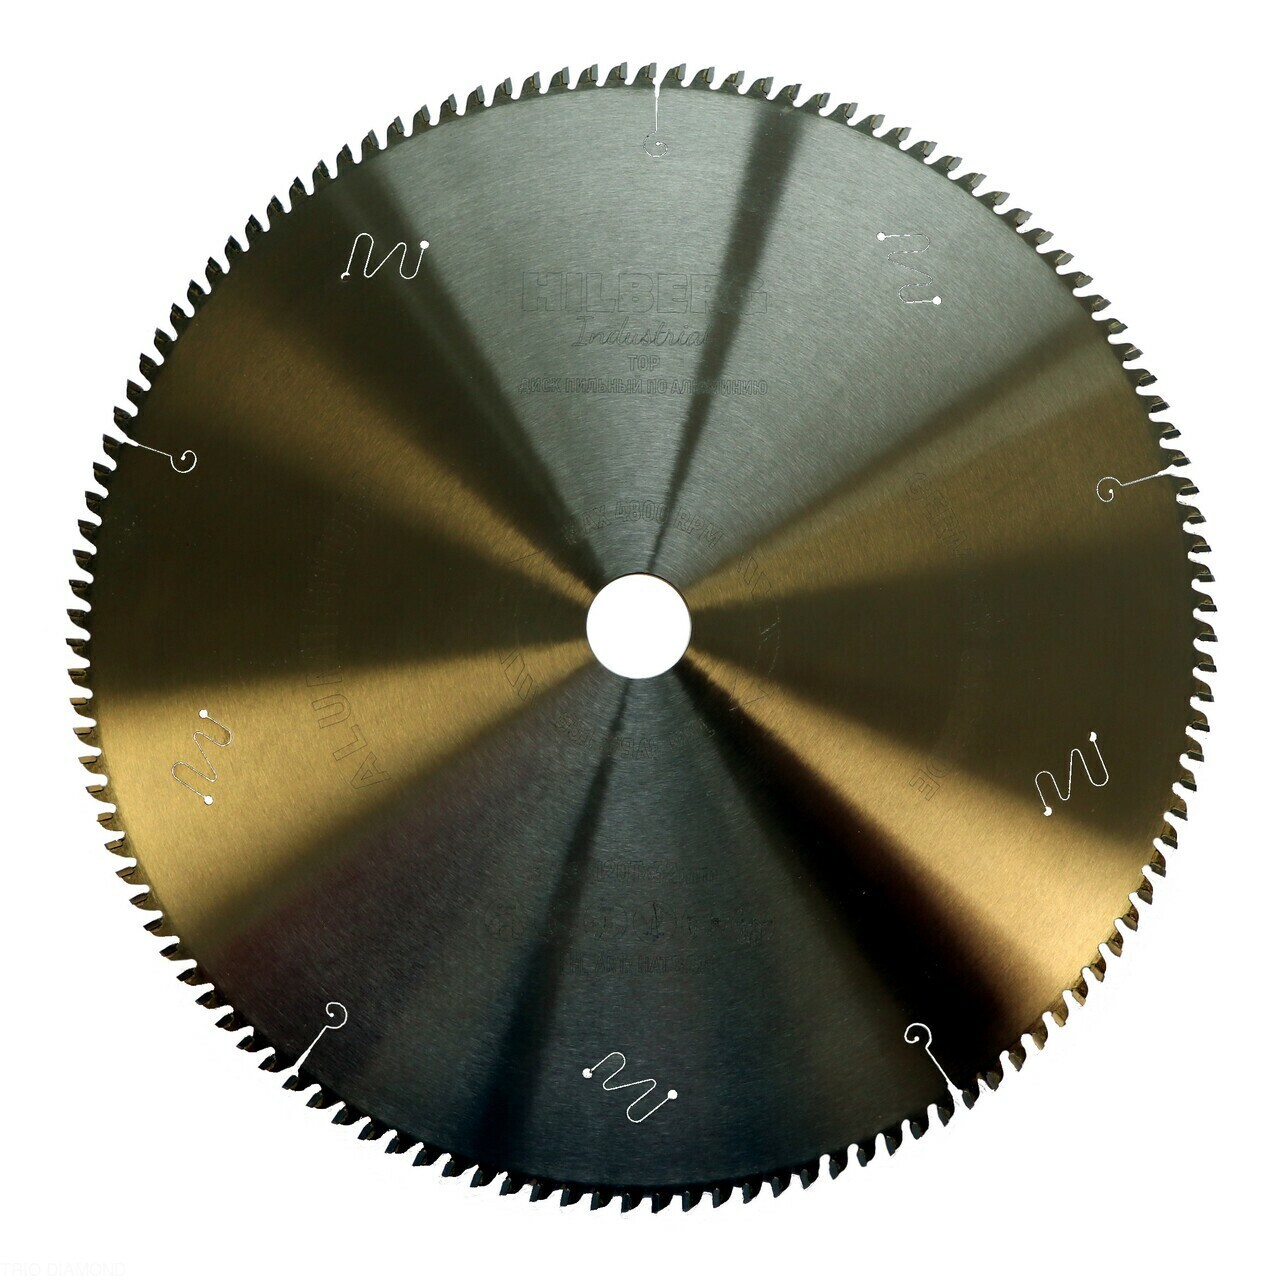 Пильный диск Hilberg Industrial Aluminium TOP 355 мм, артикул 